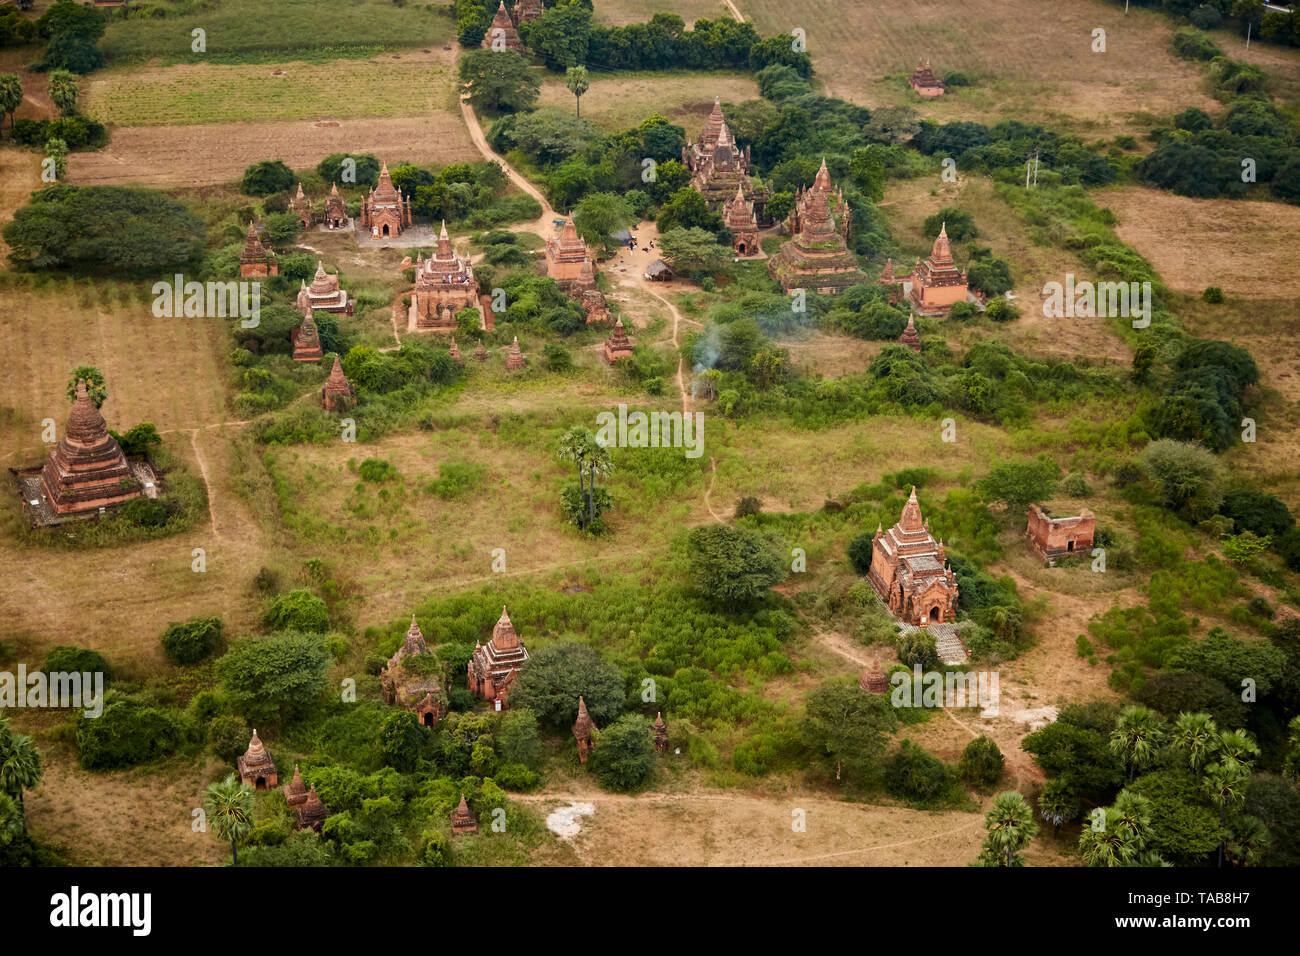 Aerial view of Buddhist temples in rural field in Bagan, Myanmar. Stock Photo